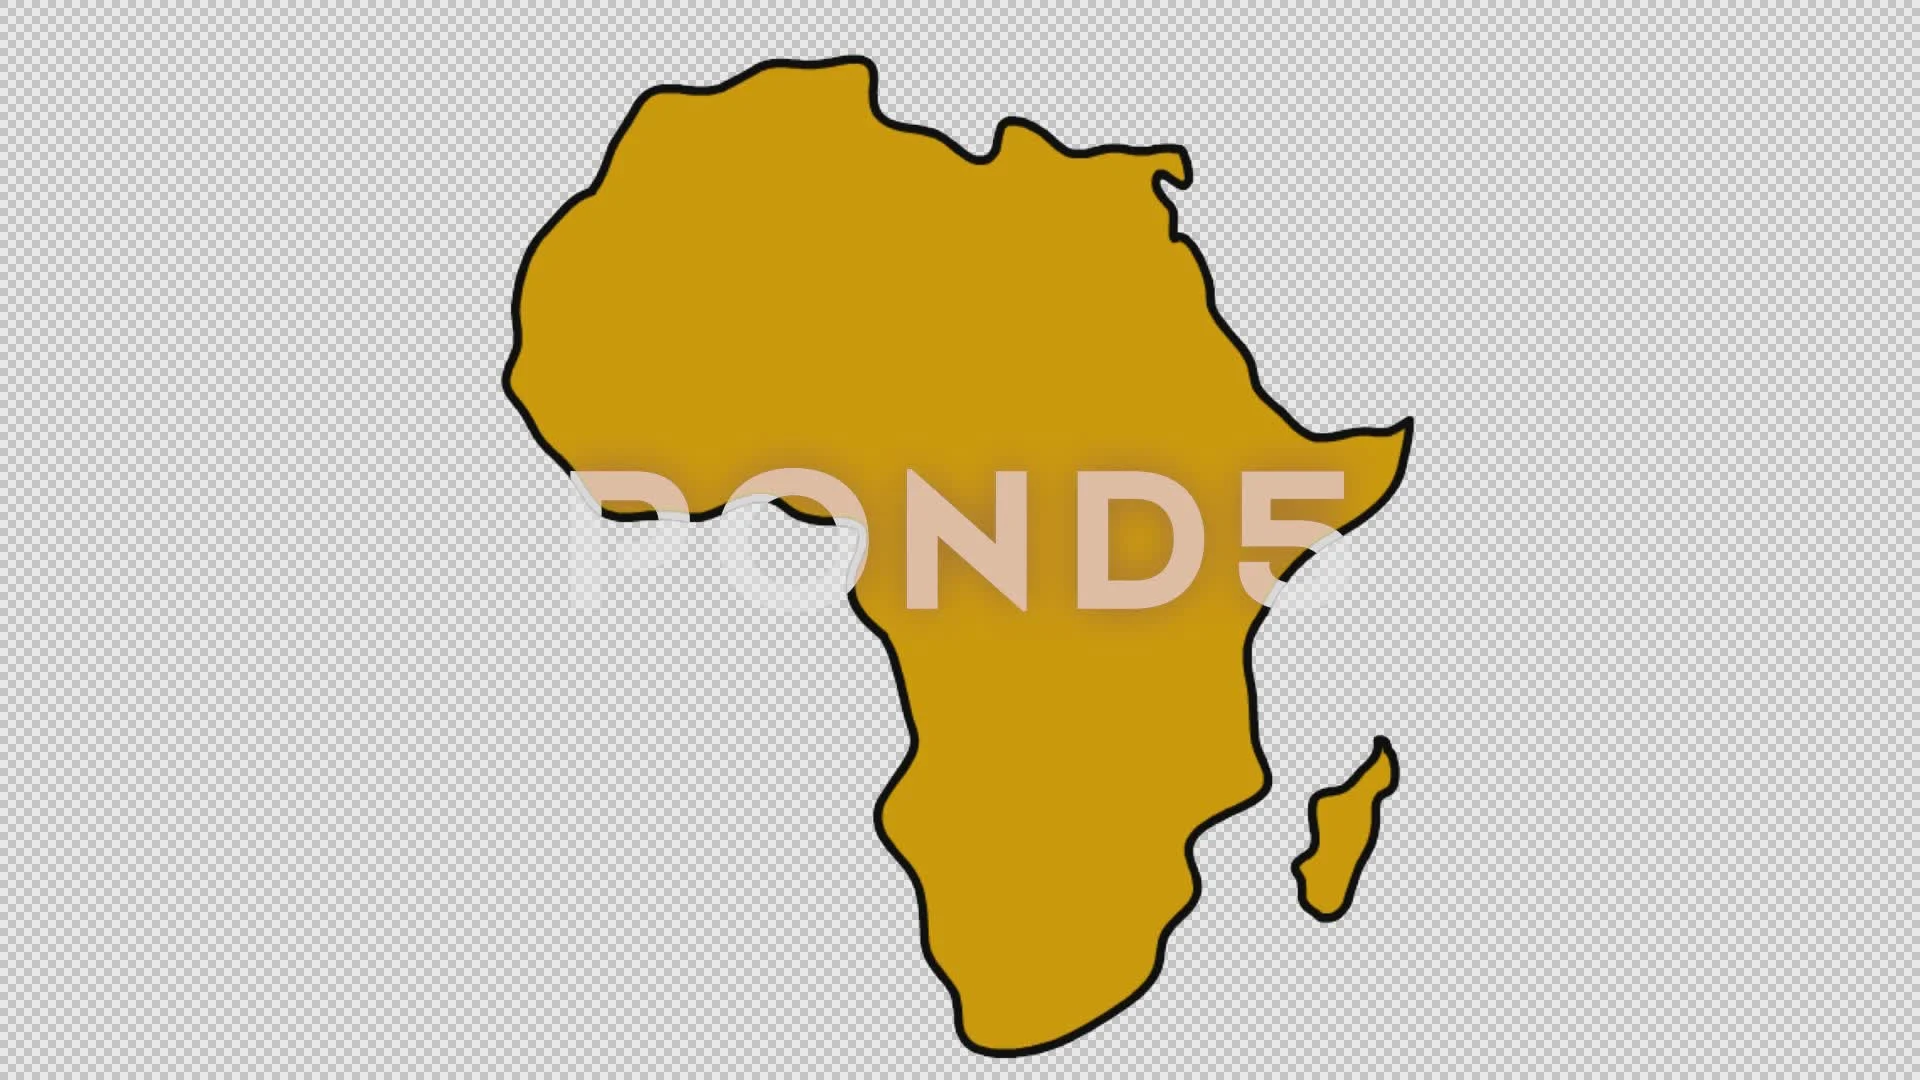 transparent africa map